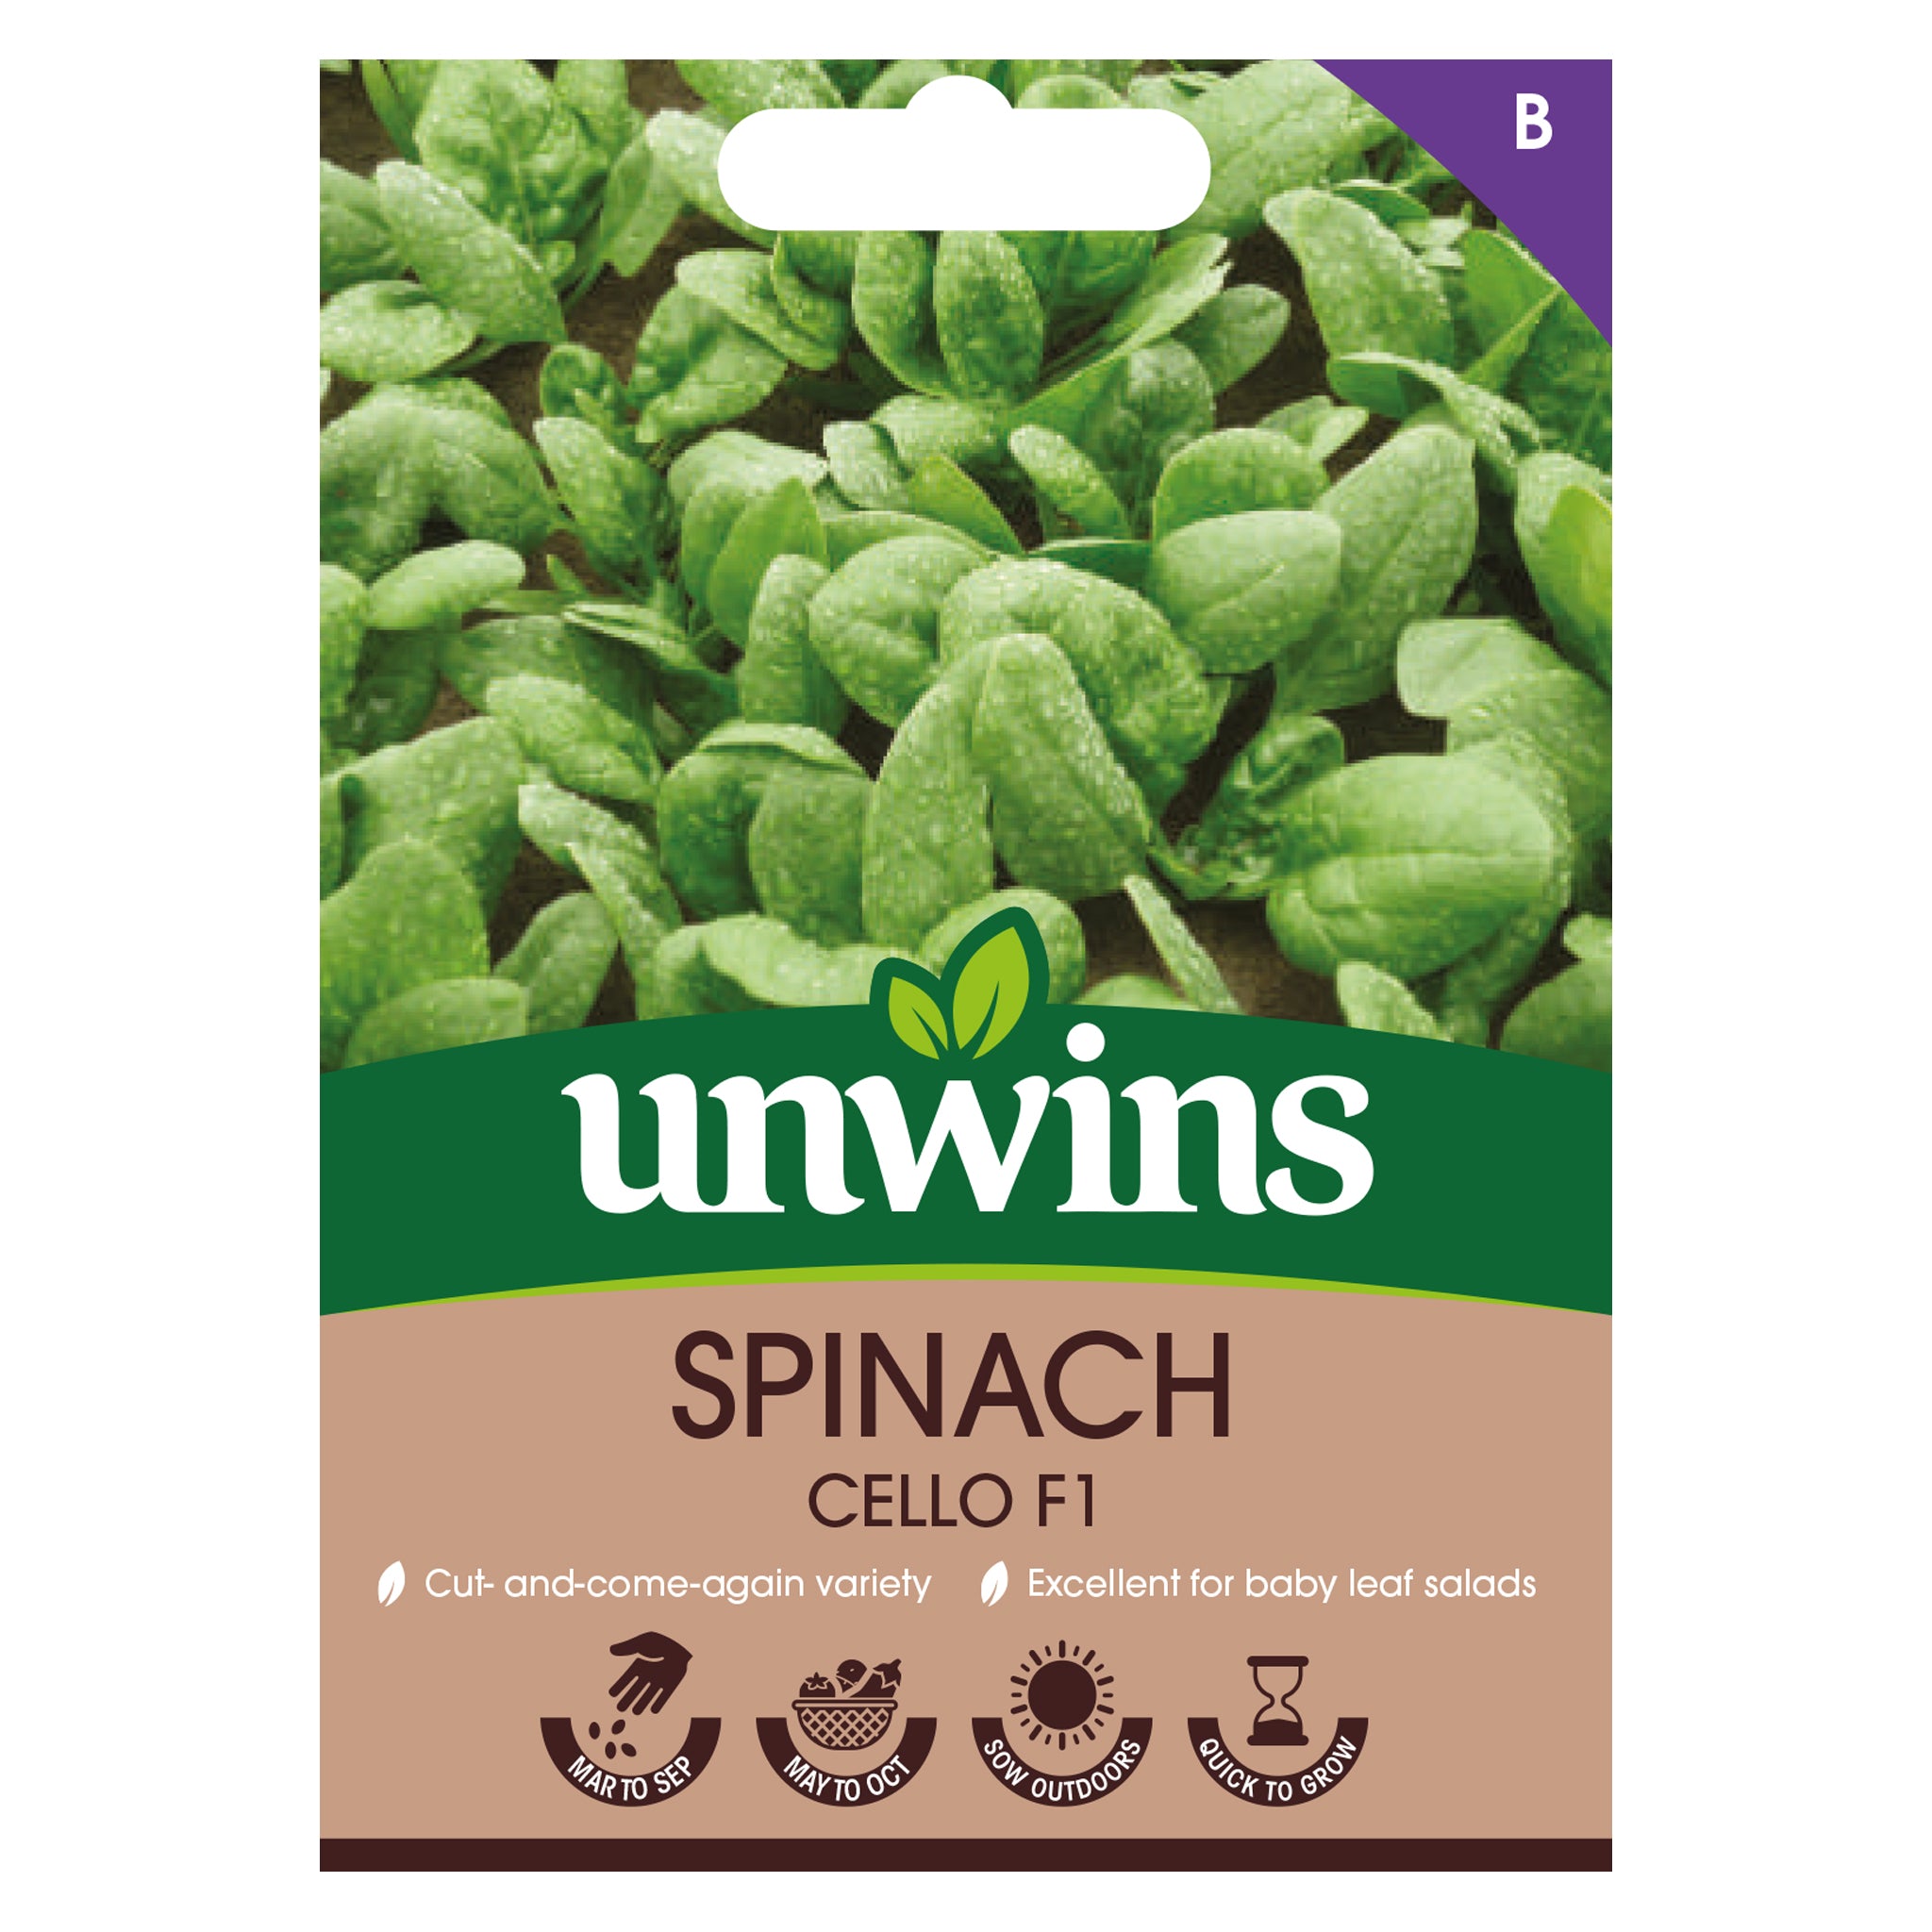 Unwins Spinach Cello F1 Seeds